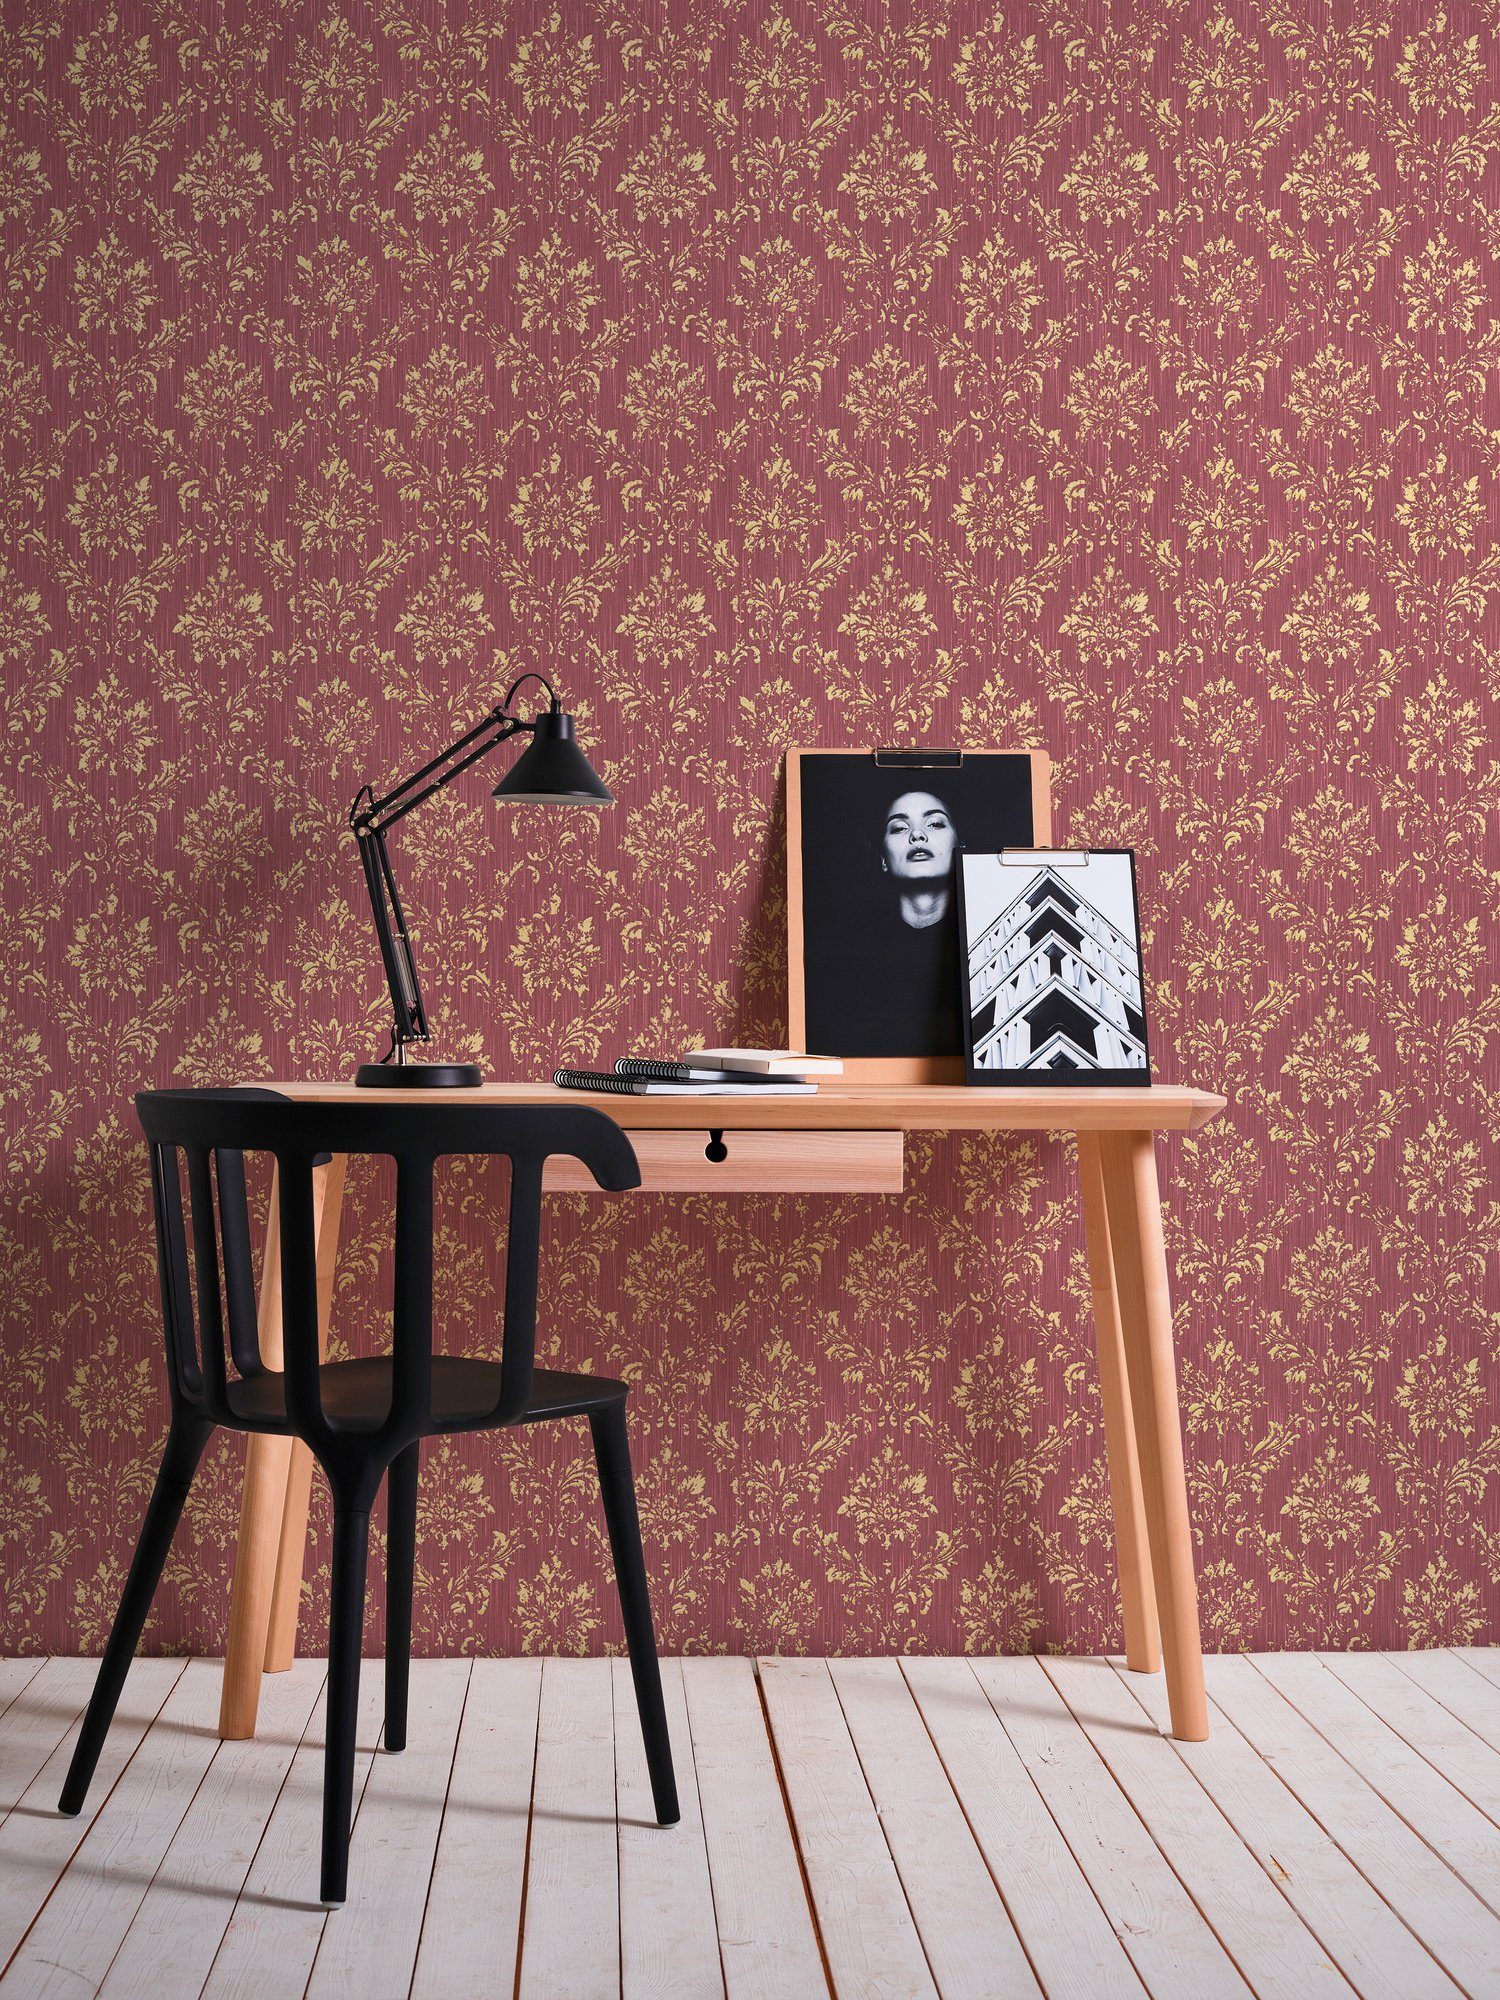 Architects Paper Textiltapete Tapete Barock rot/gold Barock, Metallic samtig, Ornament Silk, glänzend, matt